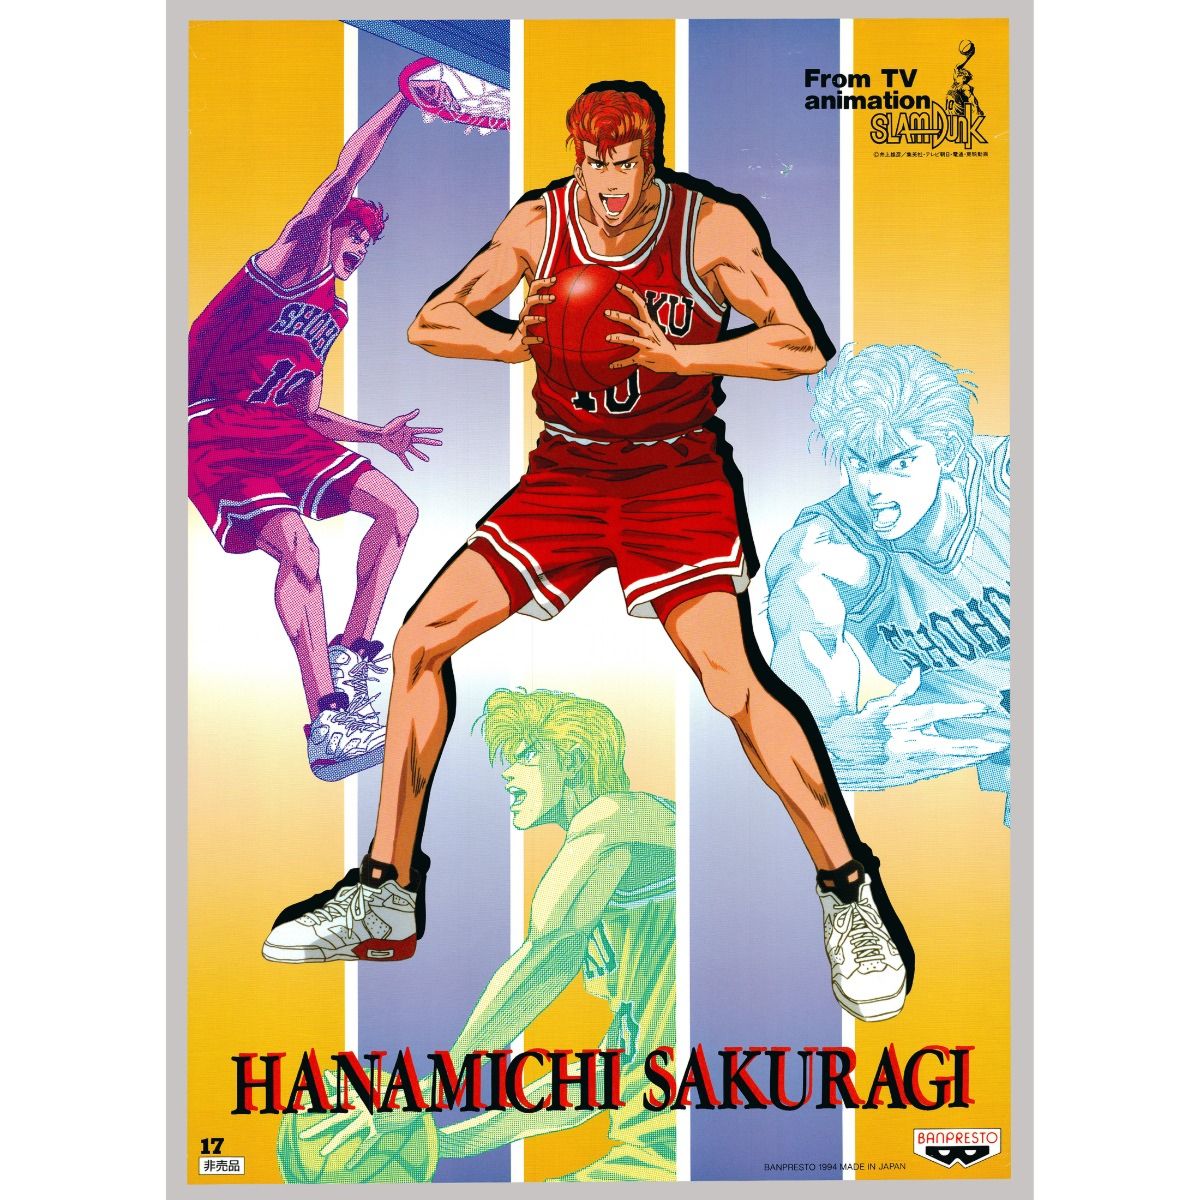 Original Slam Dunk Anime Poster